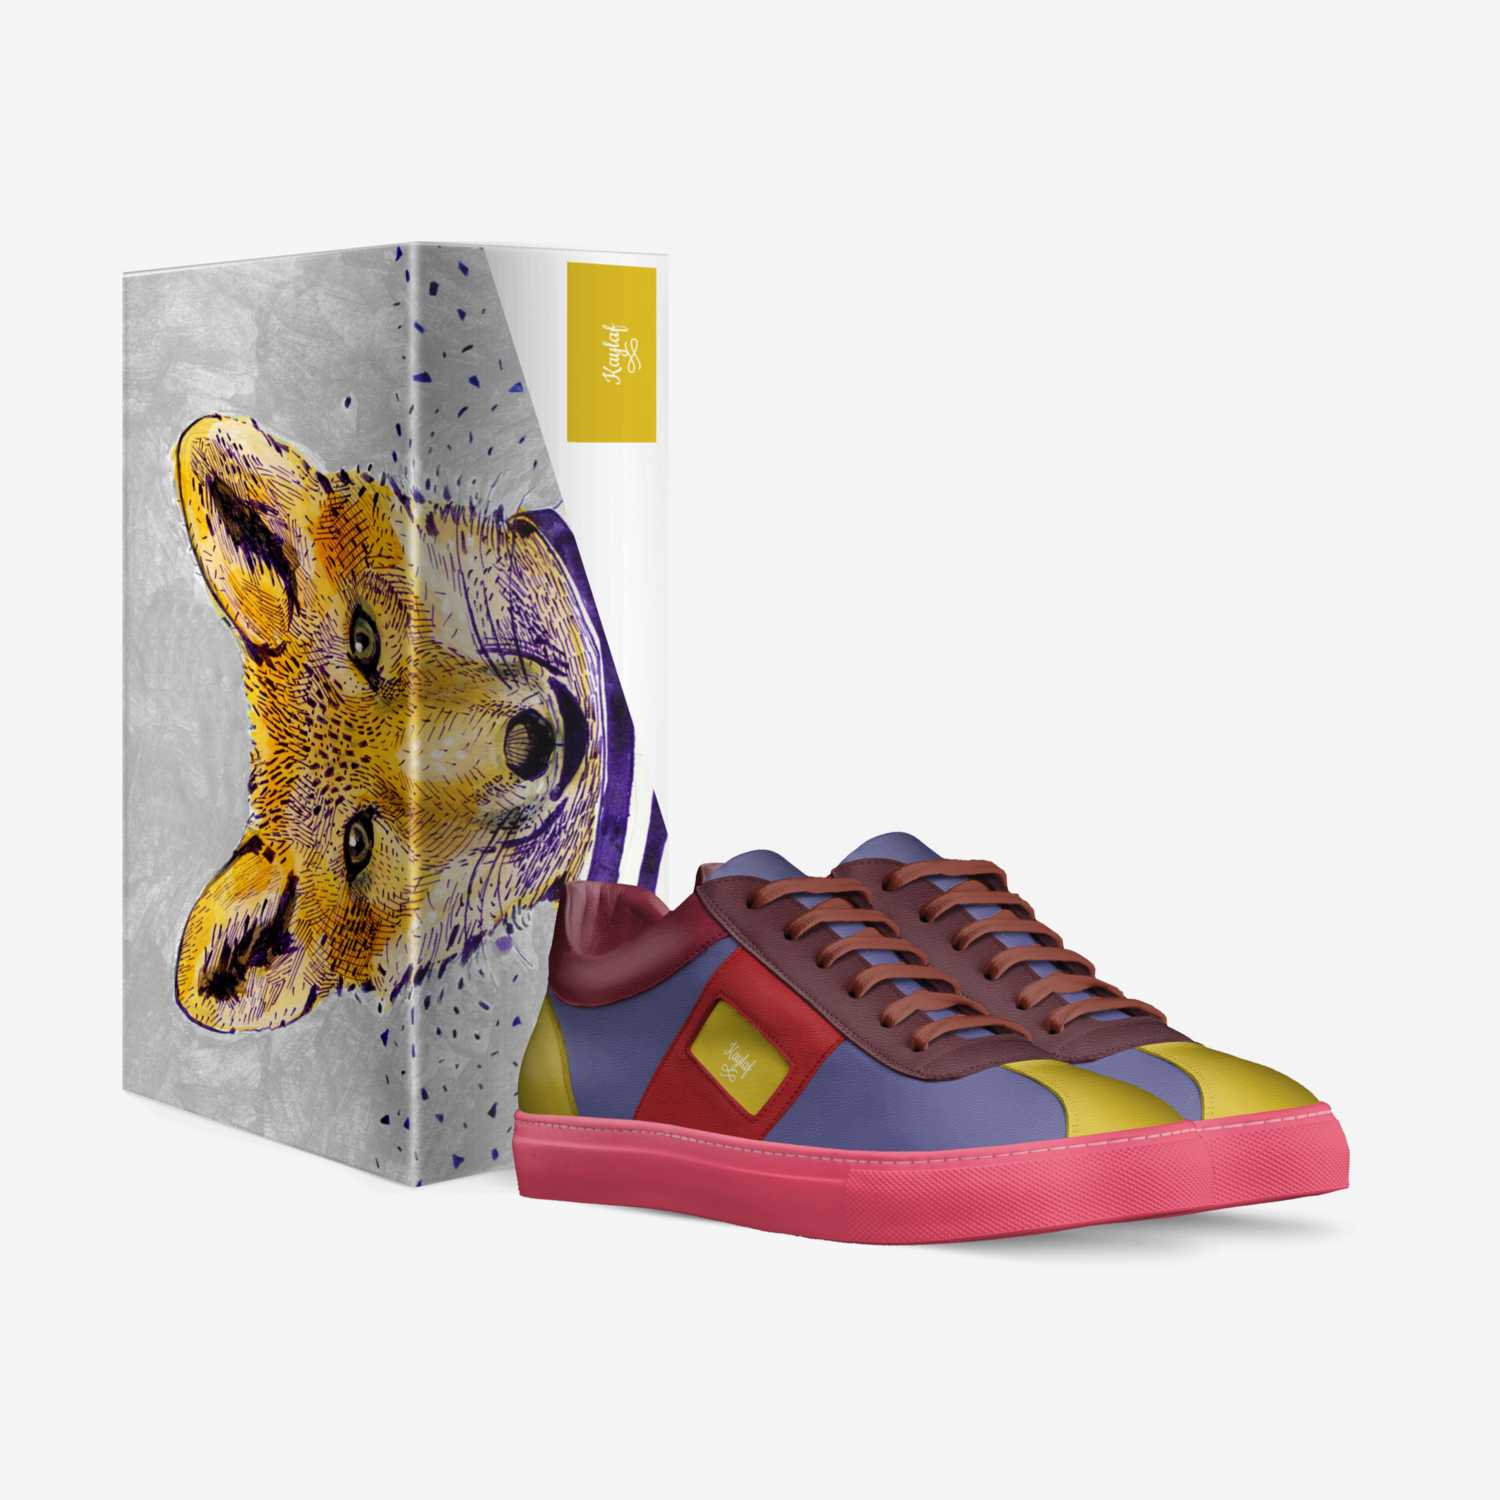 Kayla custom made in Italy shoes by Jakaya Hamblin | Box view